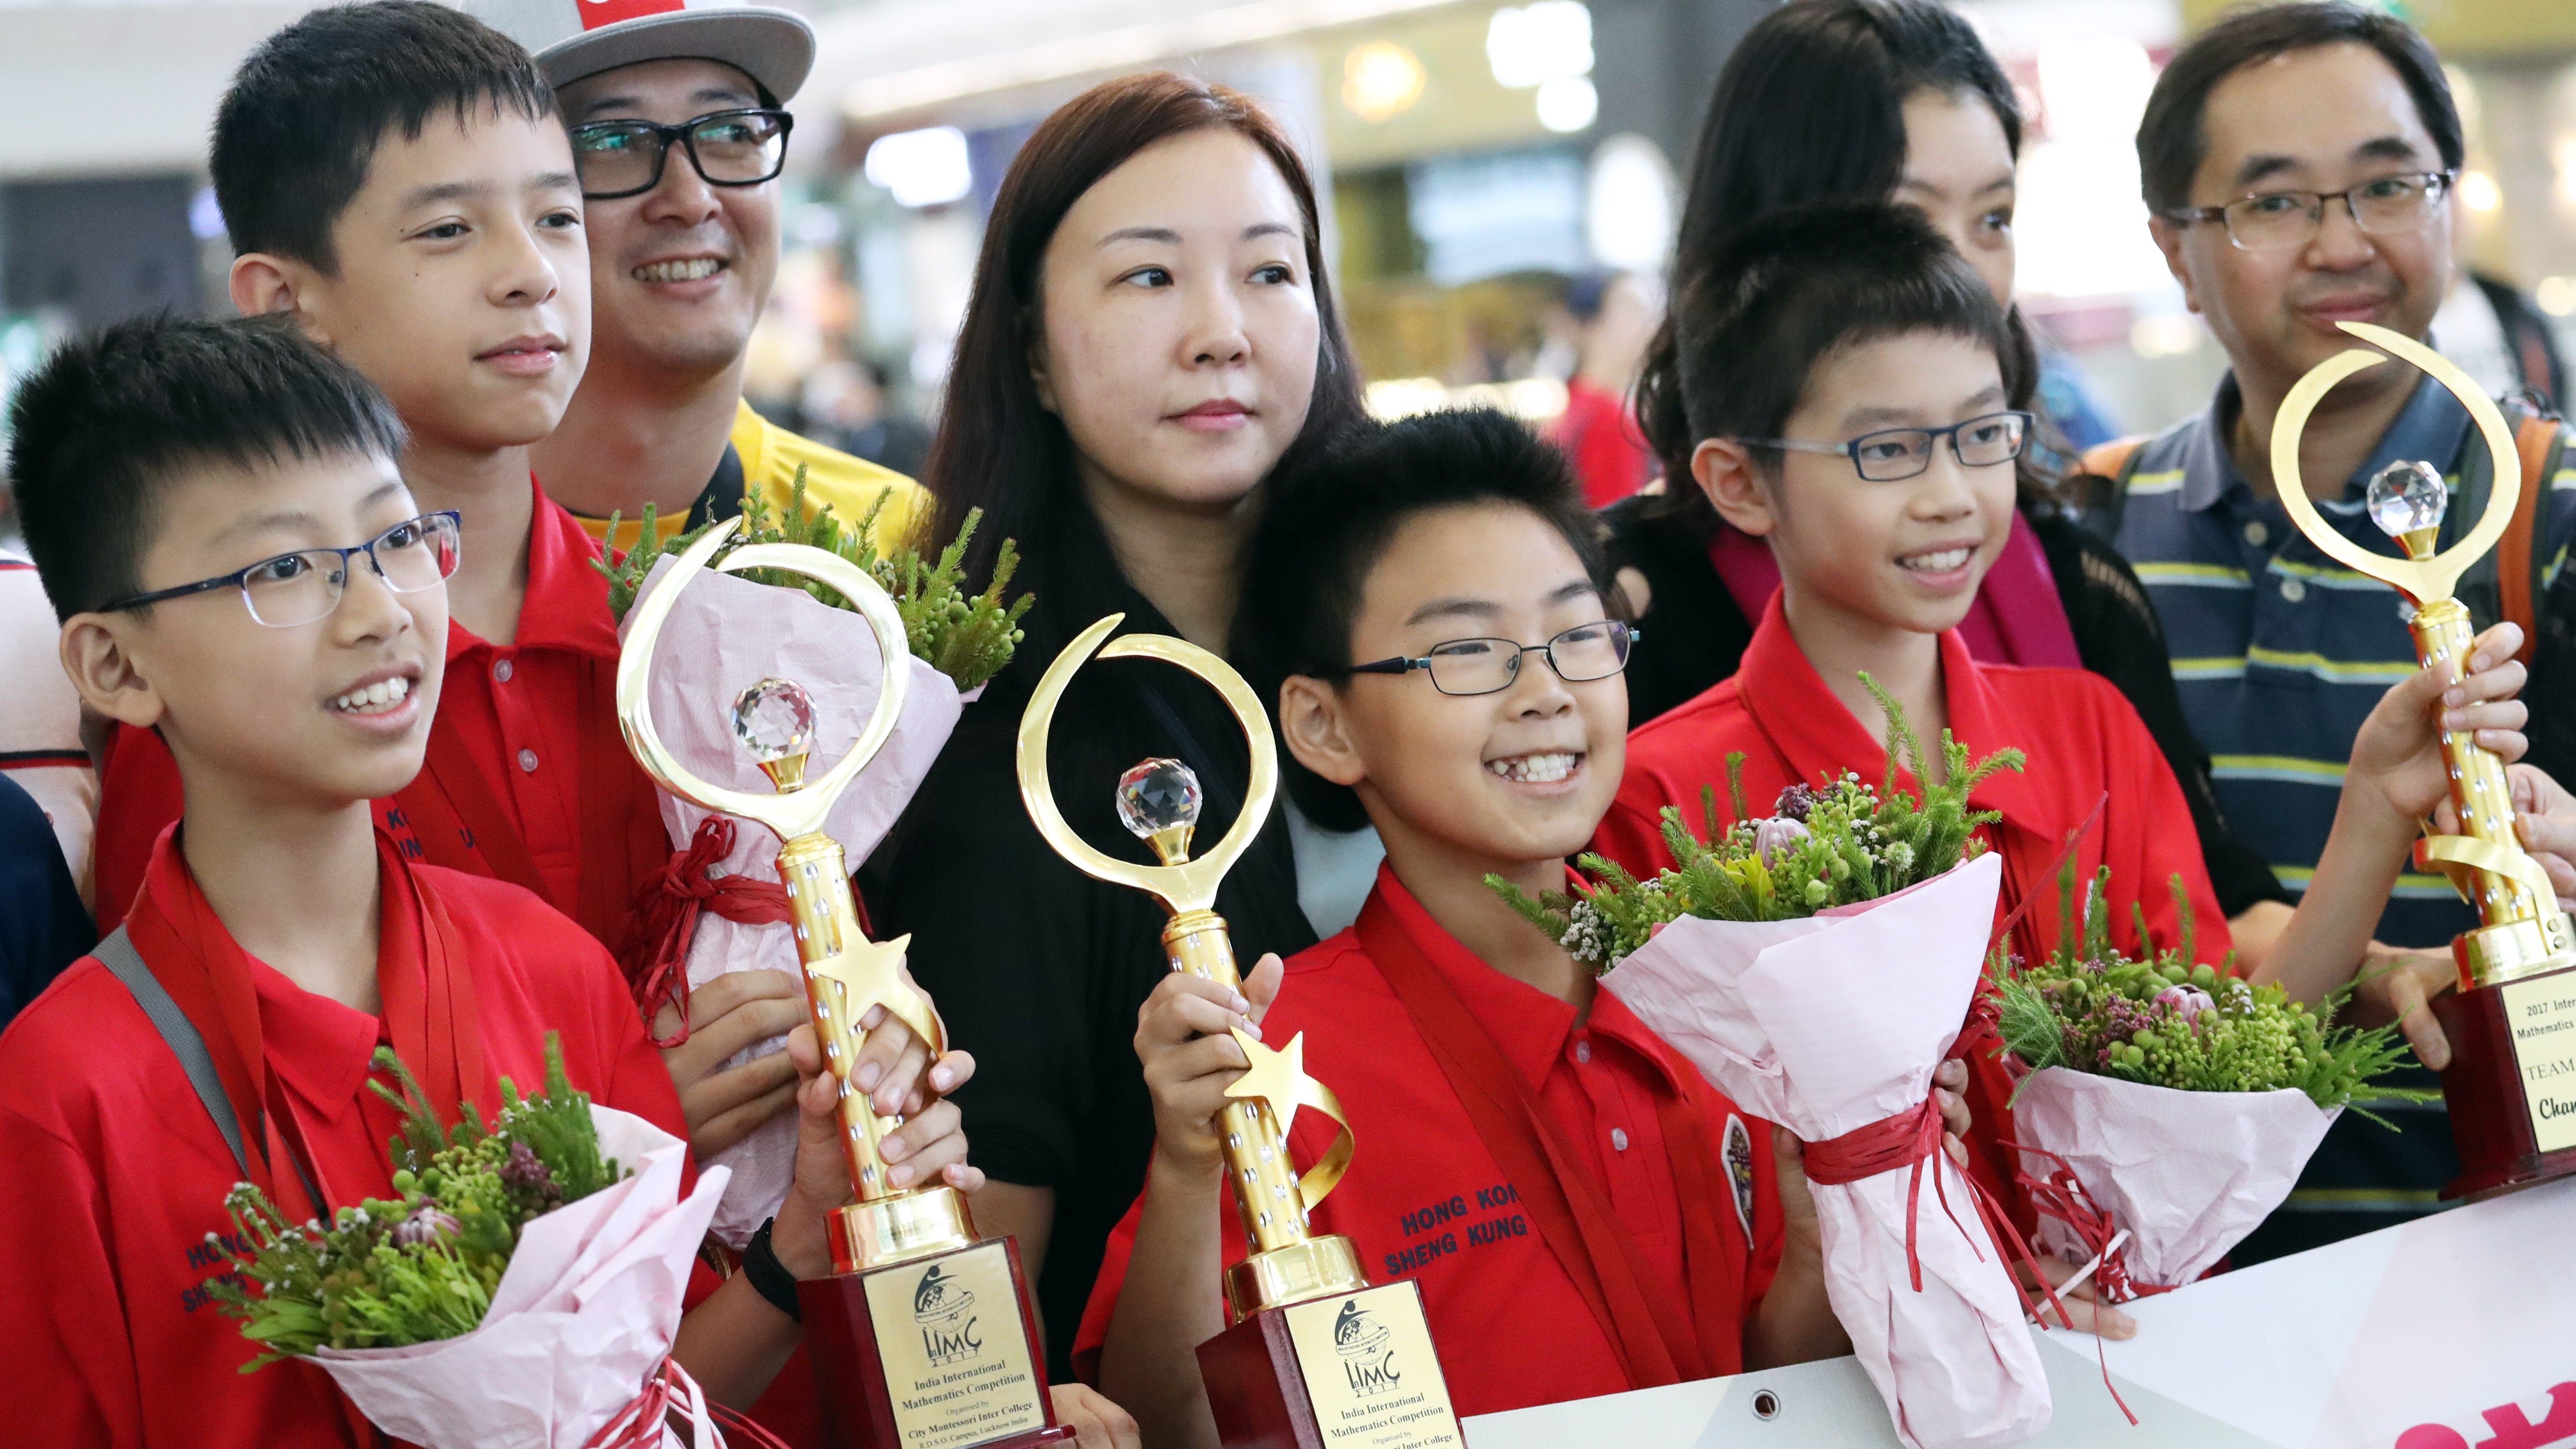 Winning team members Wong Ping-kuen, Rex Lo Chung-hei, Yiu Chun-hei and Chu Cheuk-hei (from left in red) display their trophies. Photo: Nora Tam